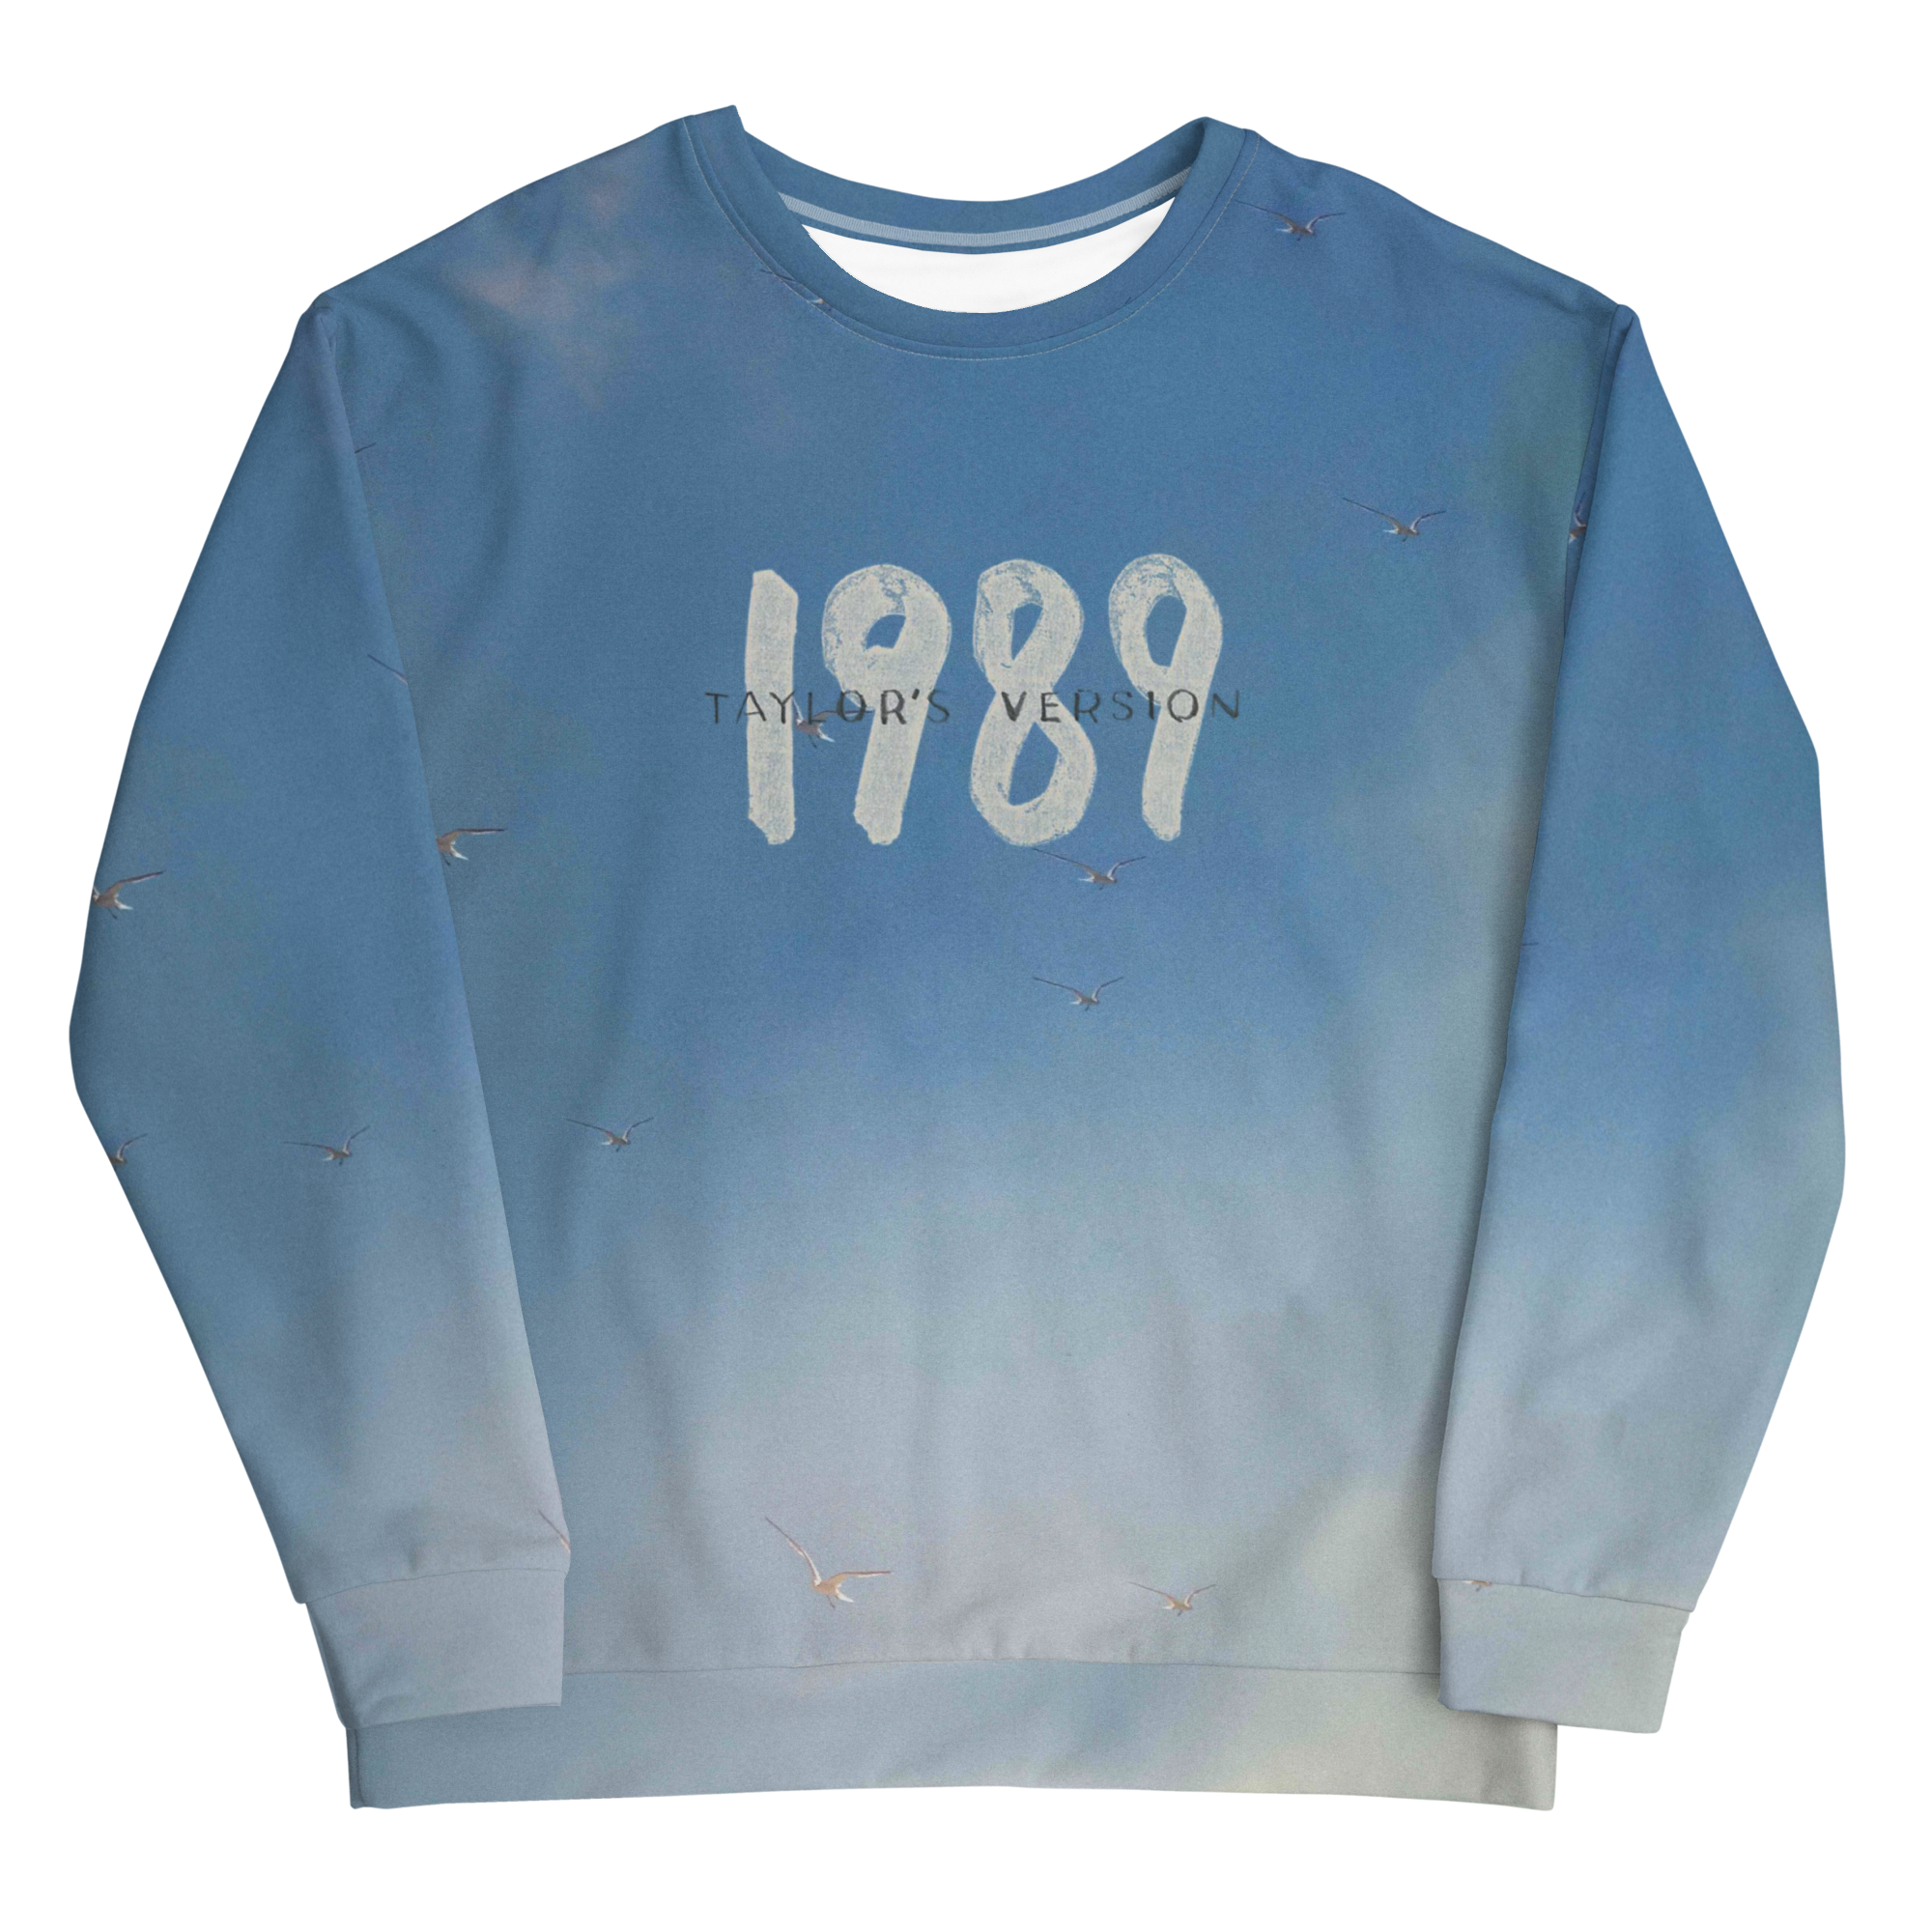 1989 (Taylor's Version) Album Cover Inspired Crewneck Sweatshirt